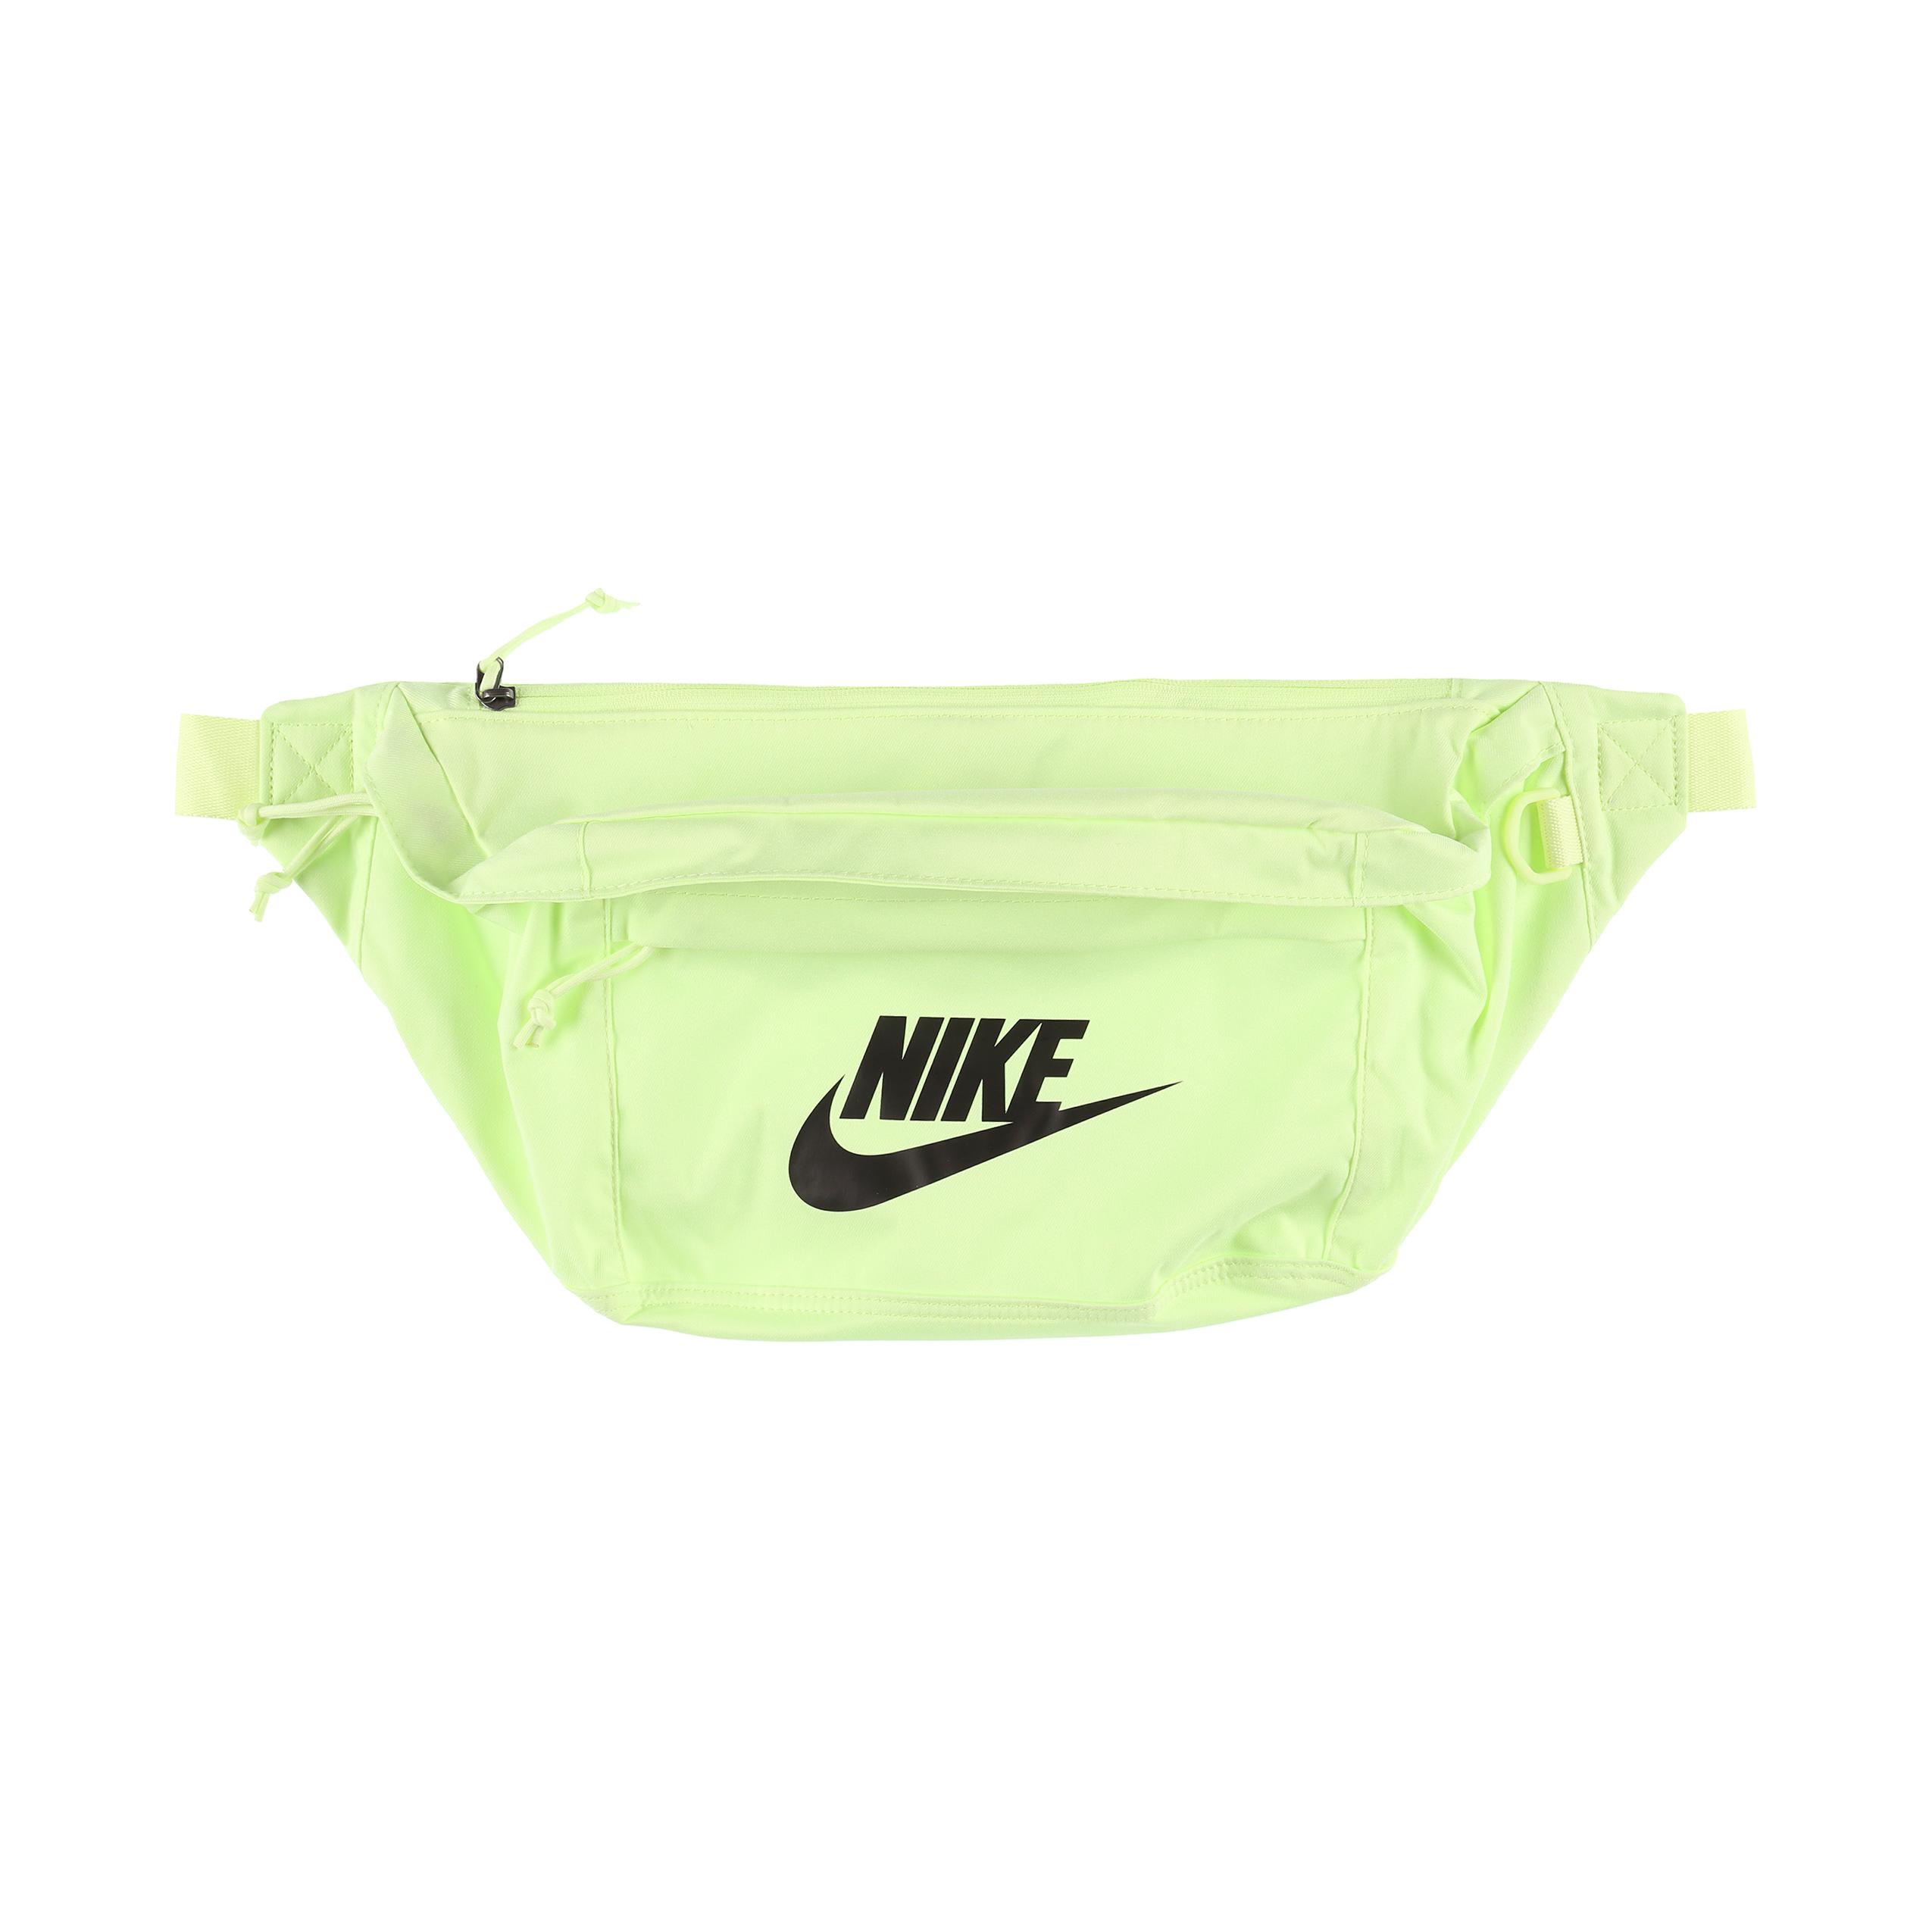 Nike Fanny Pack in Green for Men - Lyst